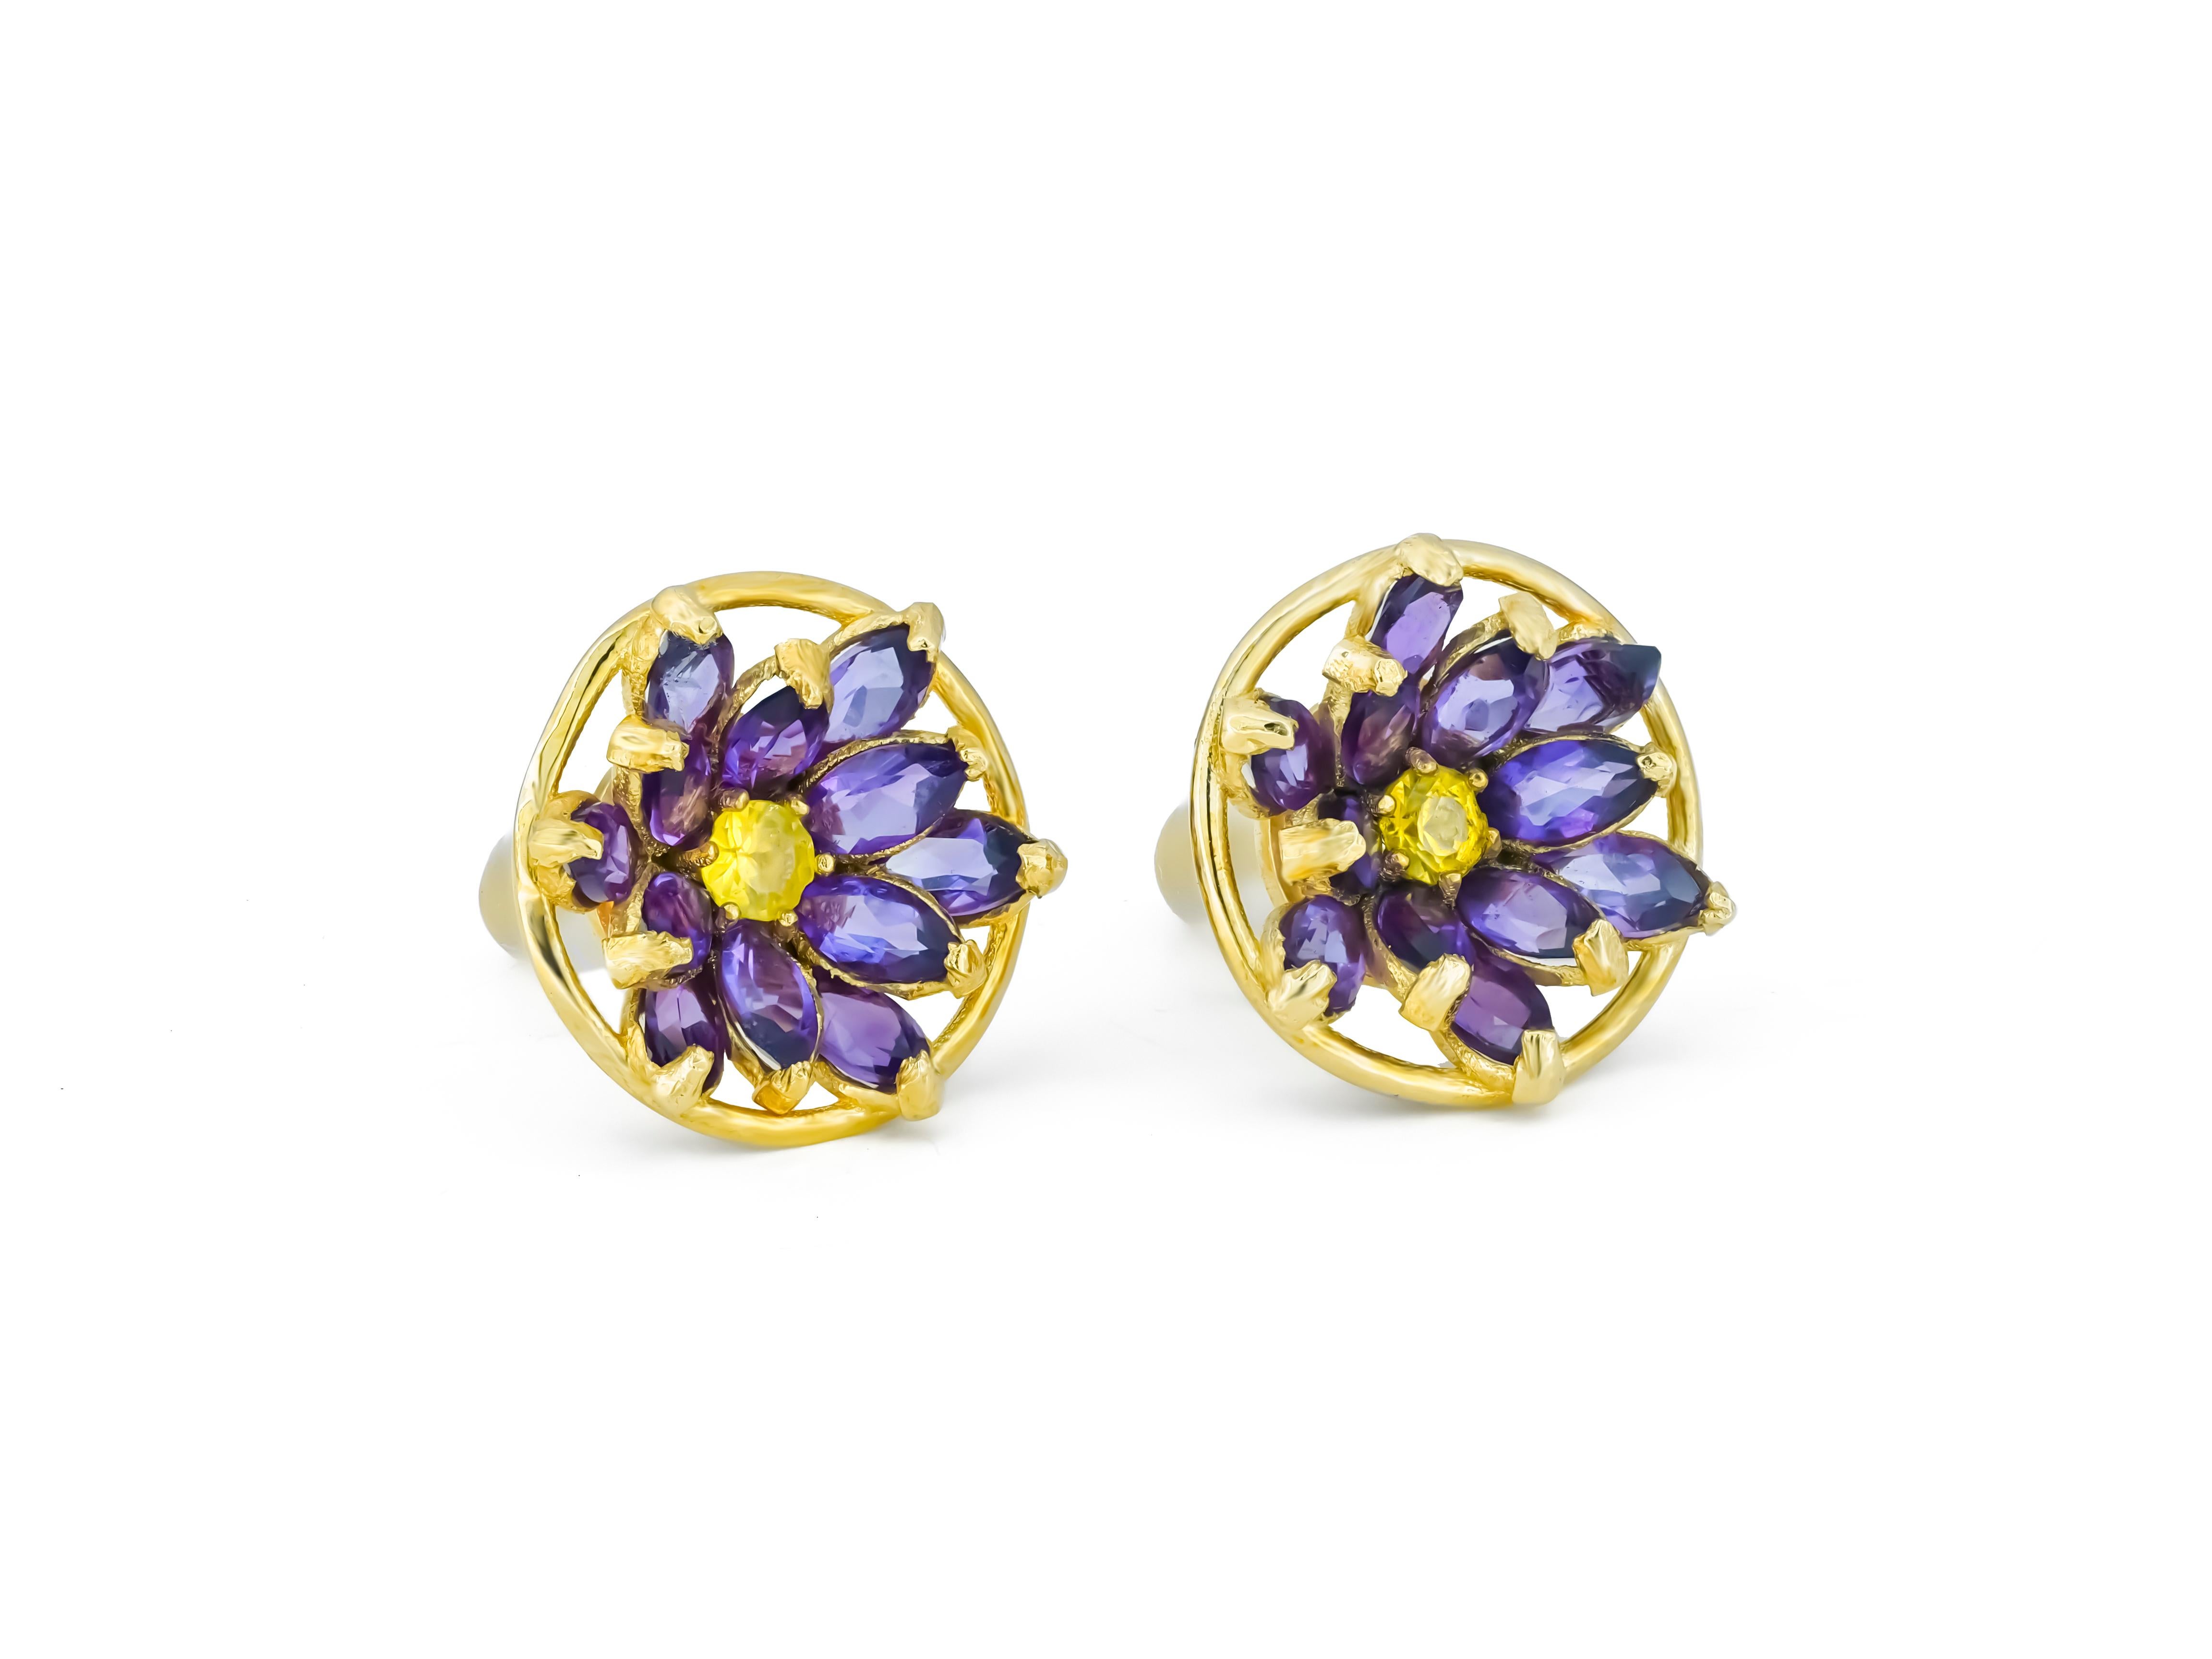 Lotus Flower Earrings Studs in 14k Gold, Amethyst and Sapphires Earrings For Sale 5